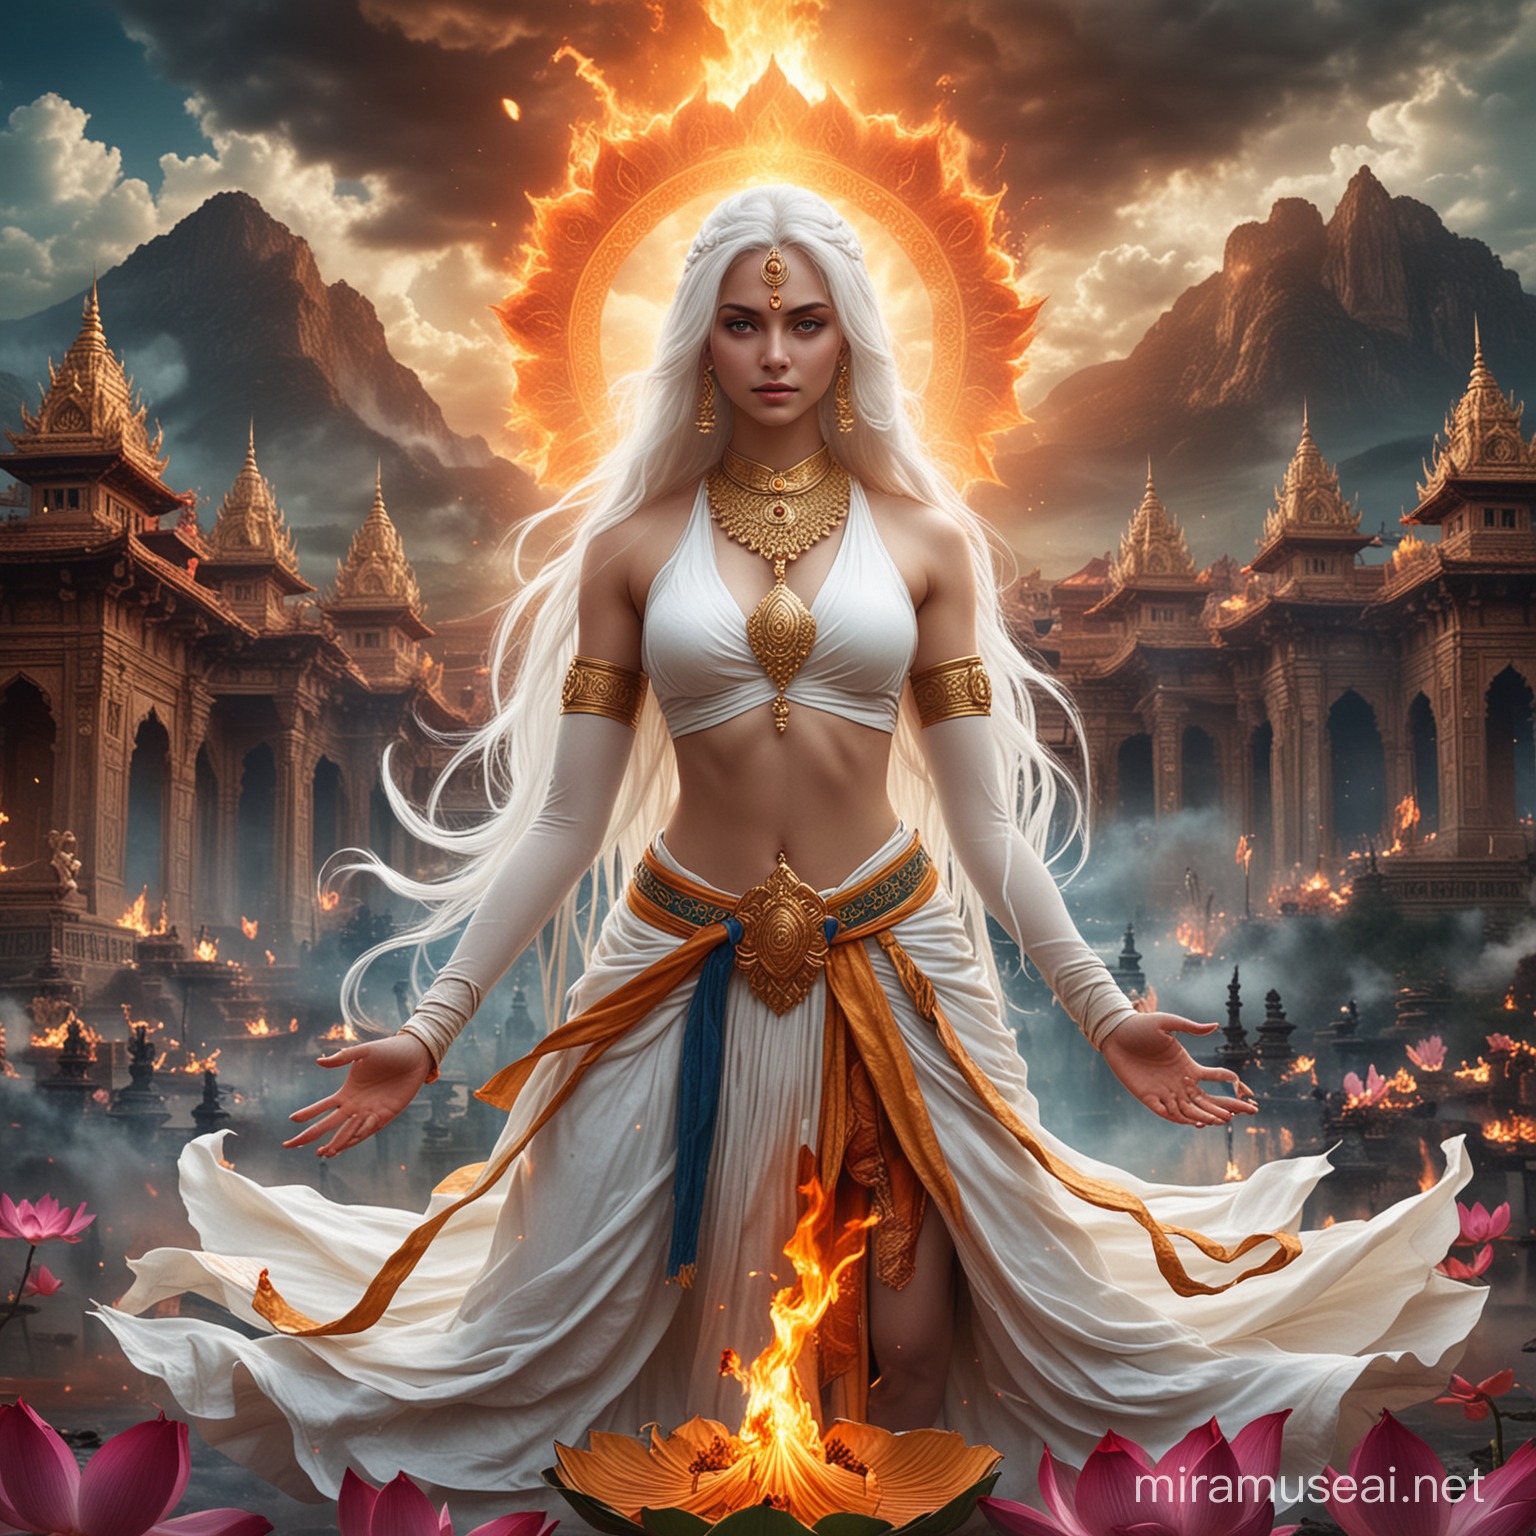 Divine Empress Kayashiel in Fiery Combat amidst Demonic Hindu Goddesses